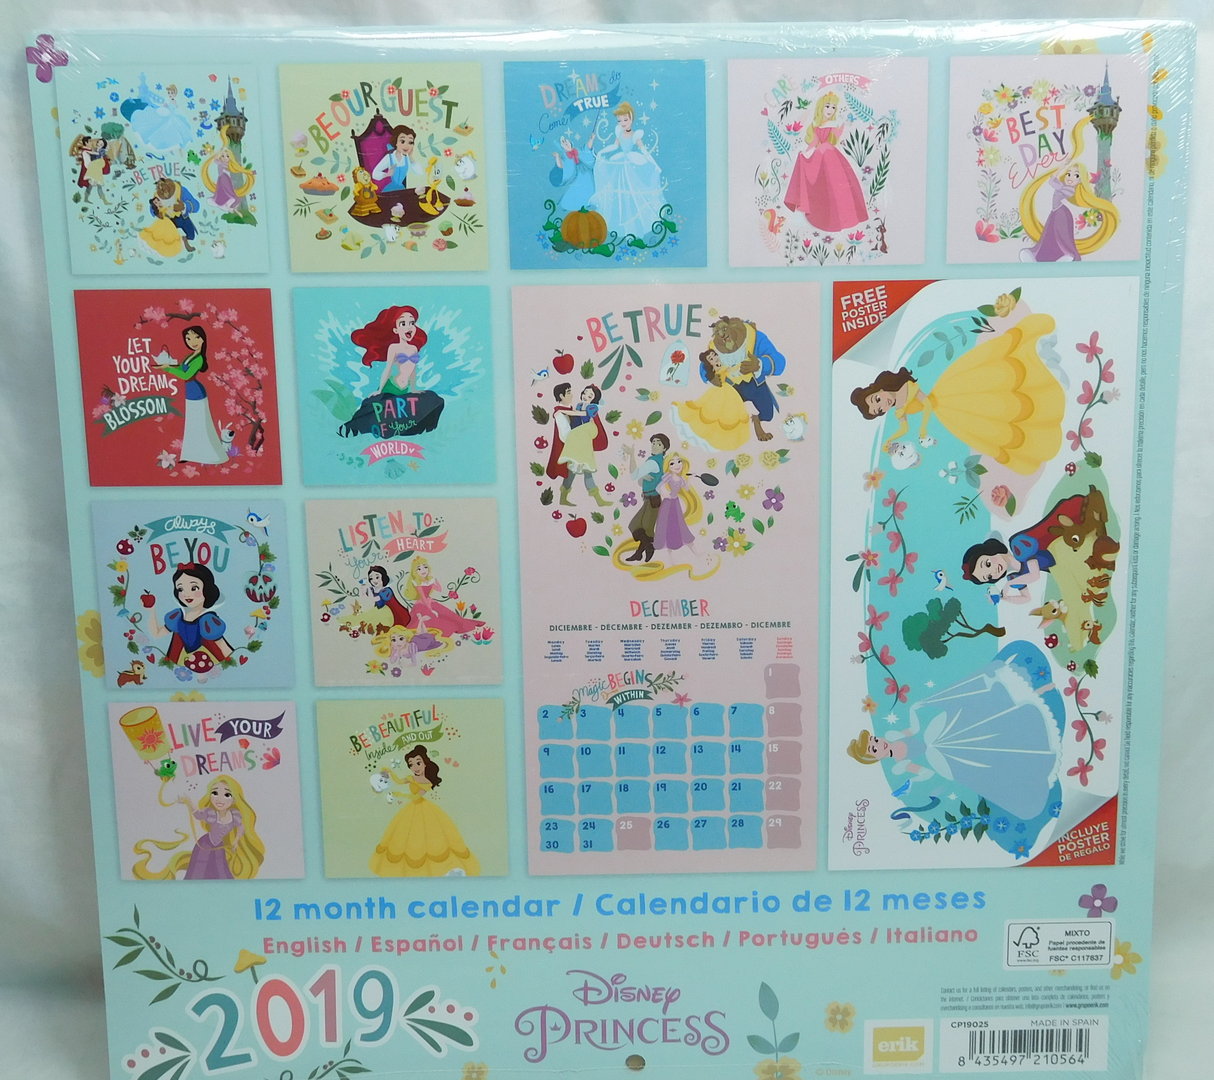 30 x 30 cm Grupo Erik editores cp19025 – Calendar 2019 Disney Princess